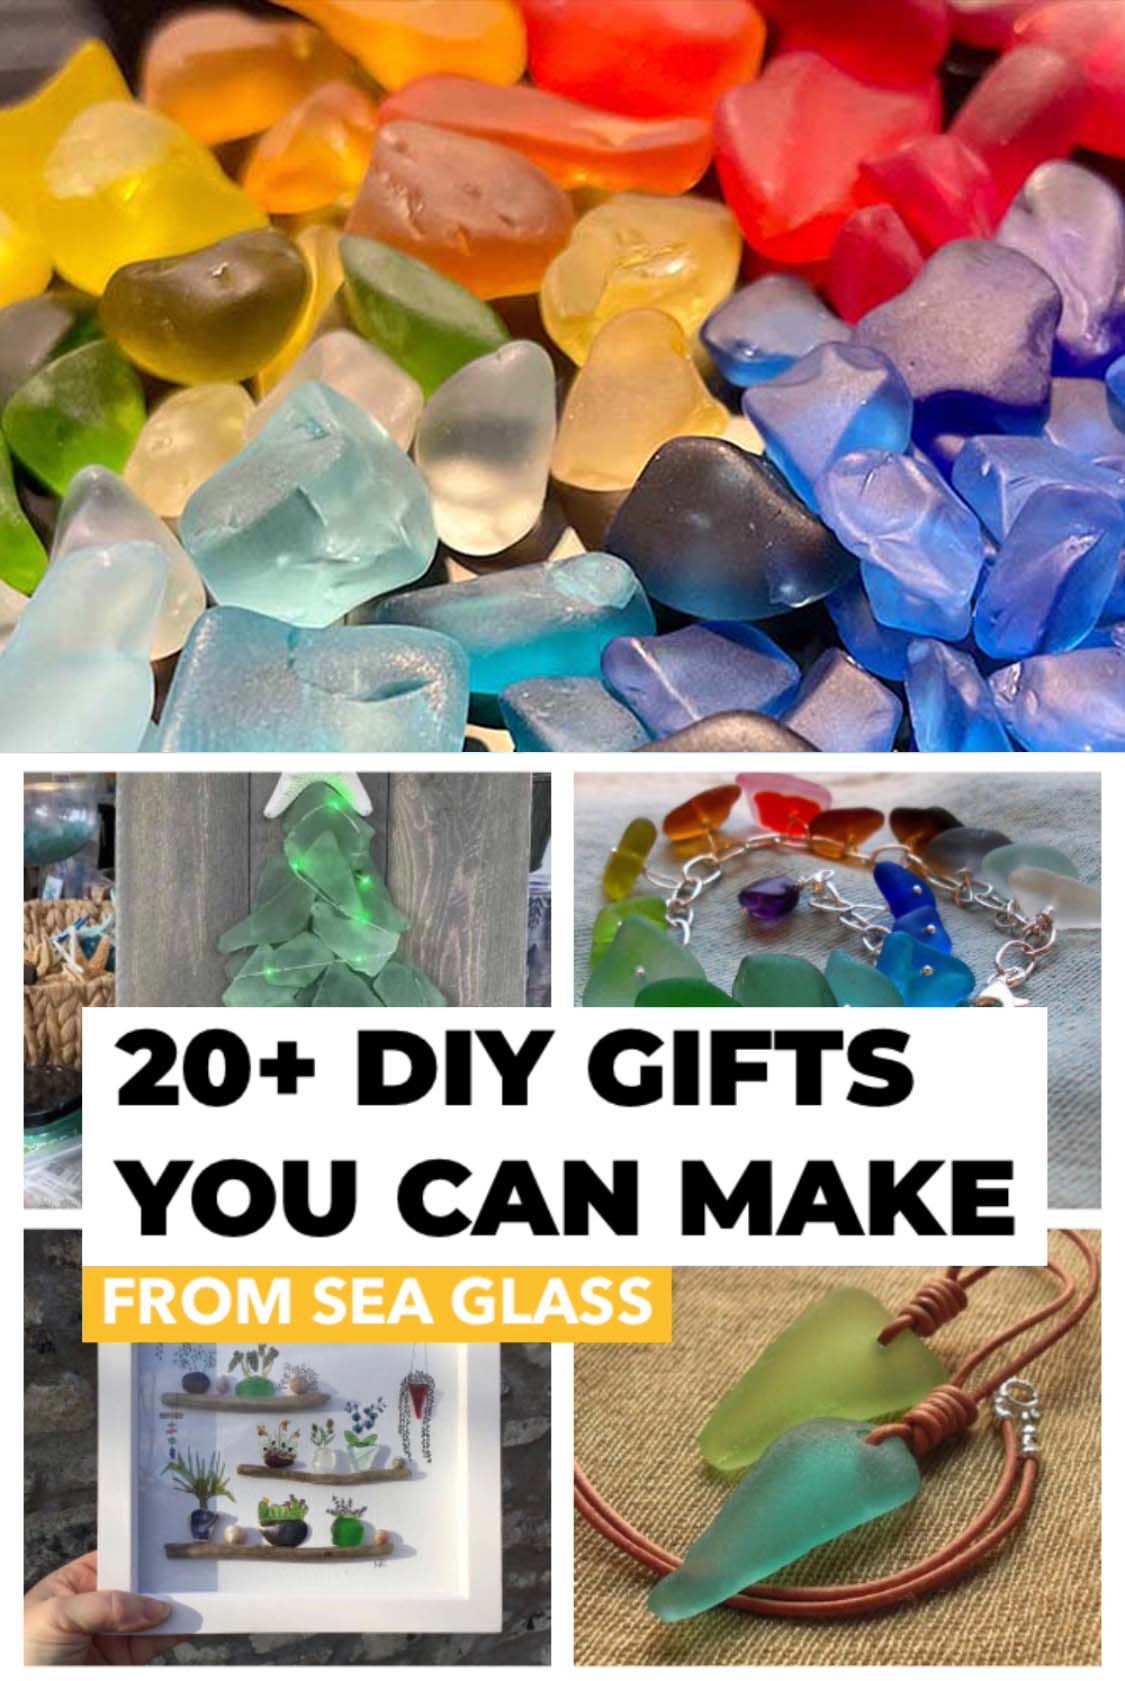 20+ DIY Sea Glass Gifts You Can Easily Make Yourself - Love Sea Glass